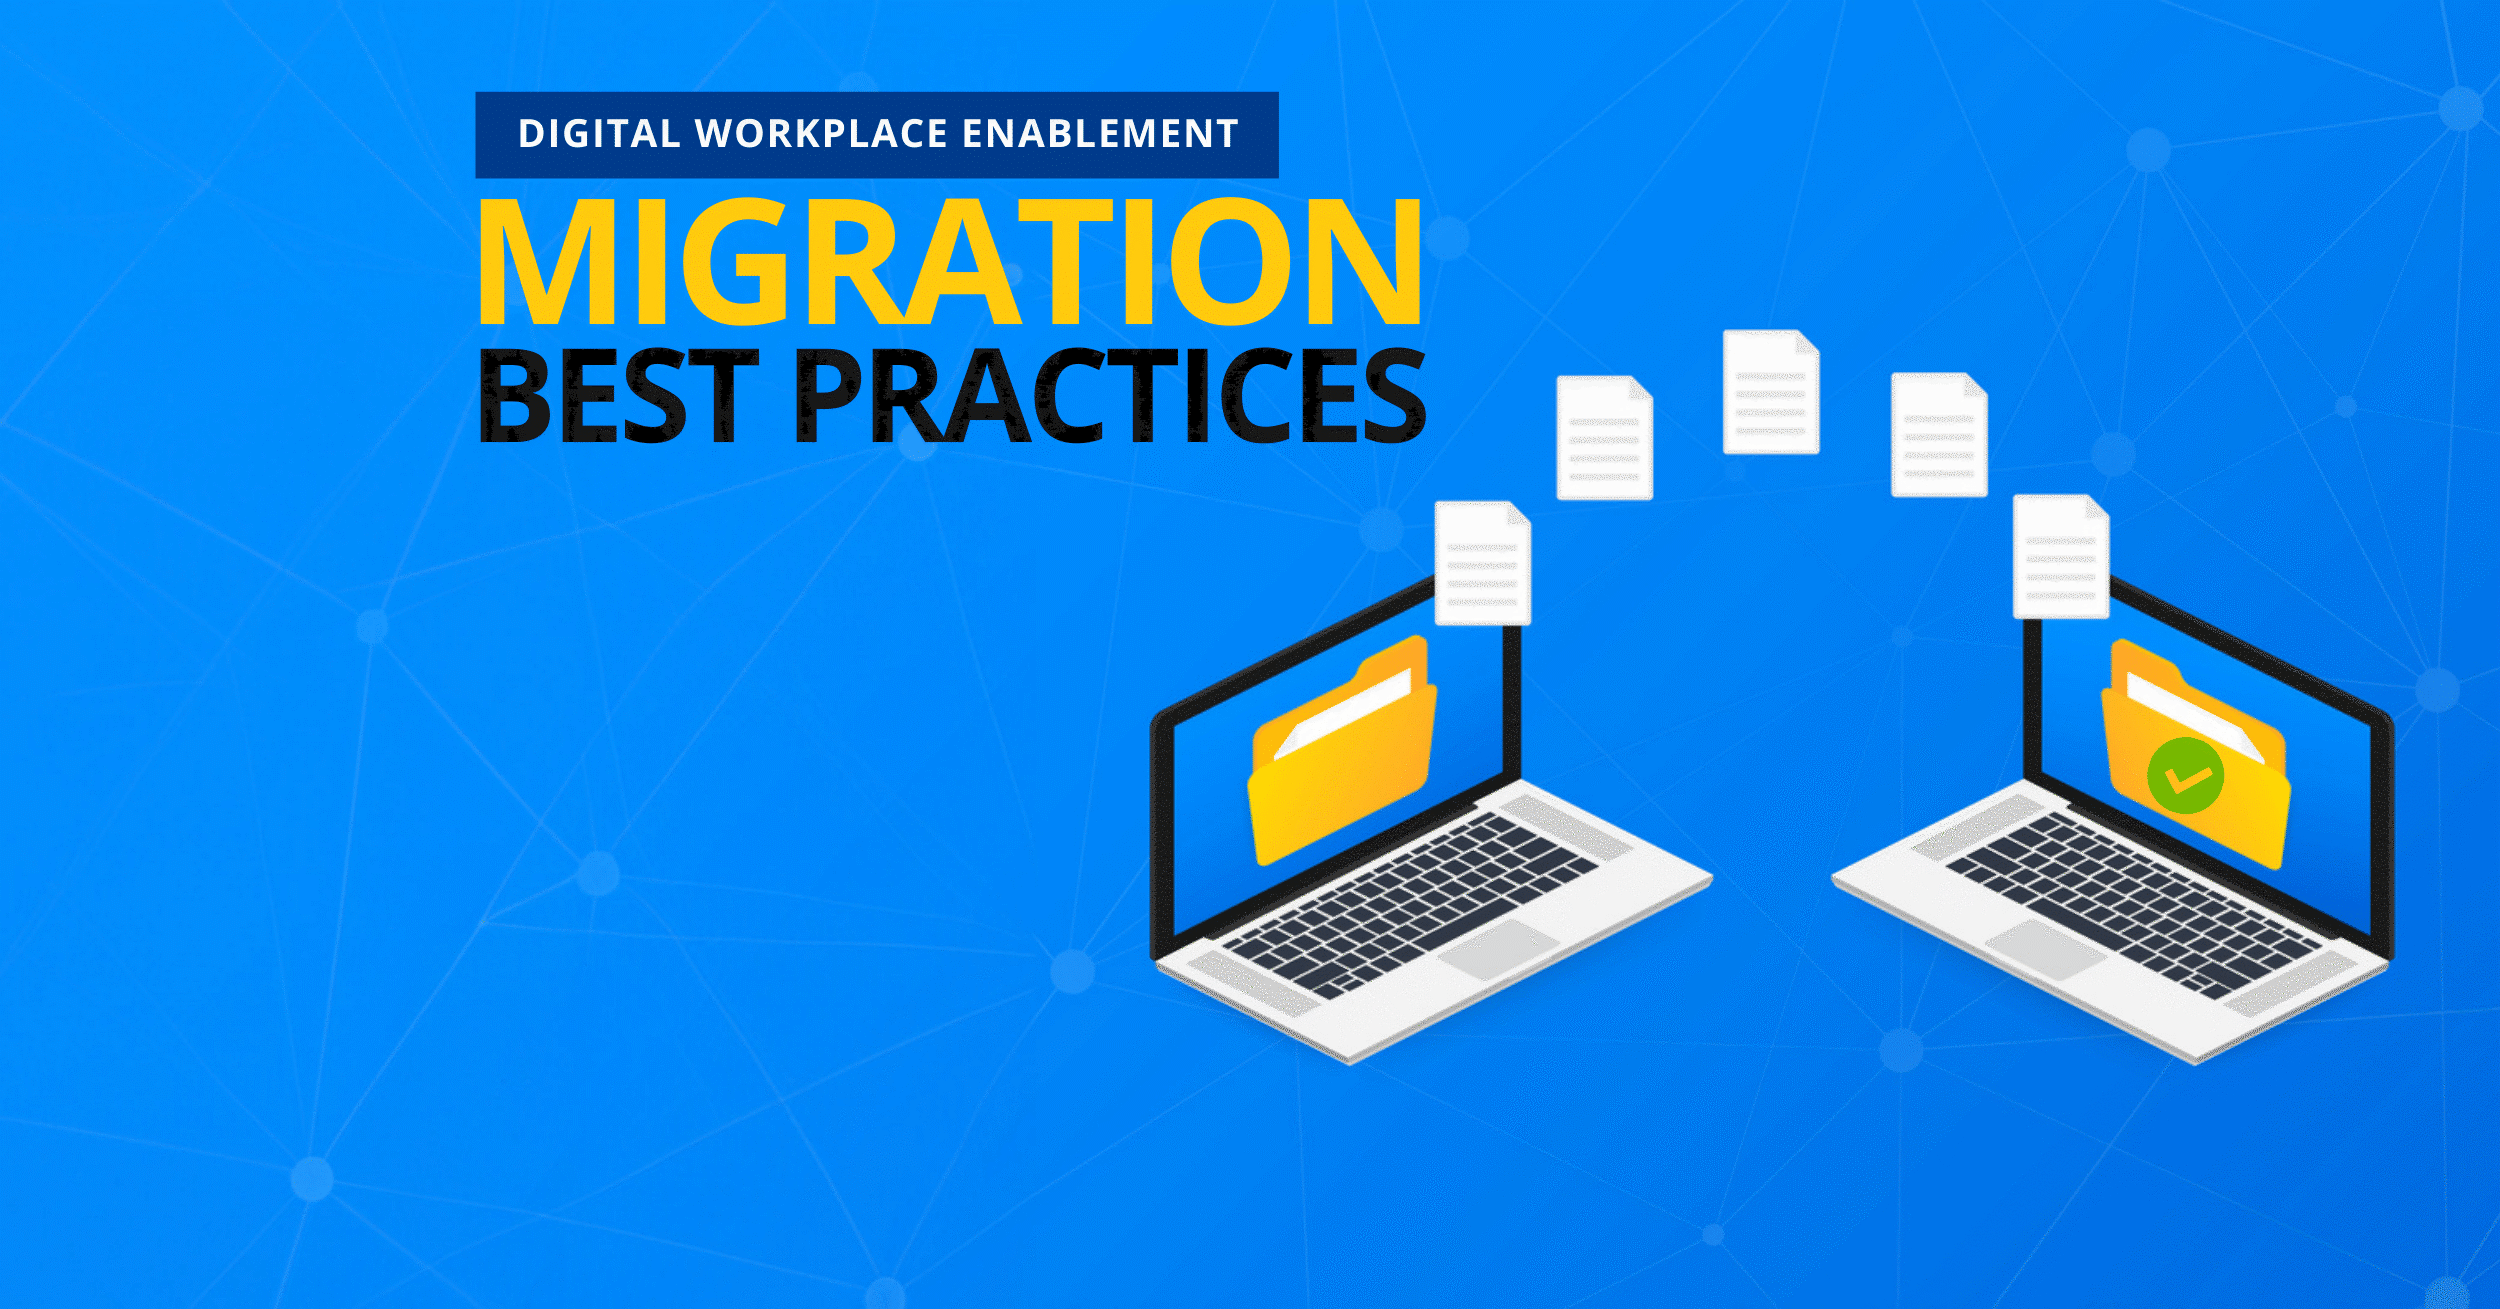 Digital workplace enablement data migration best practices